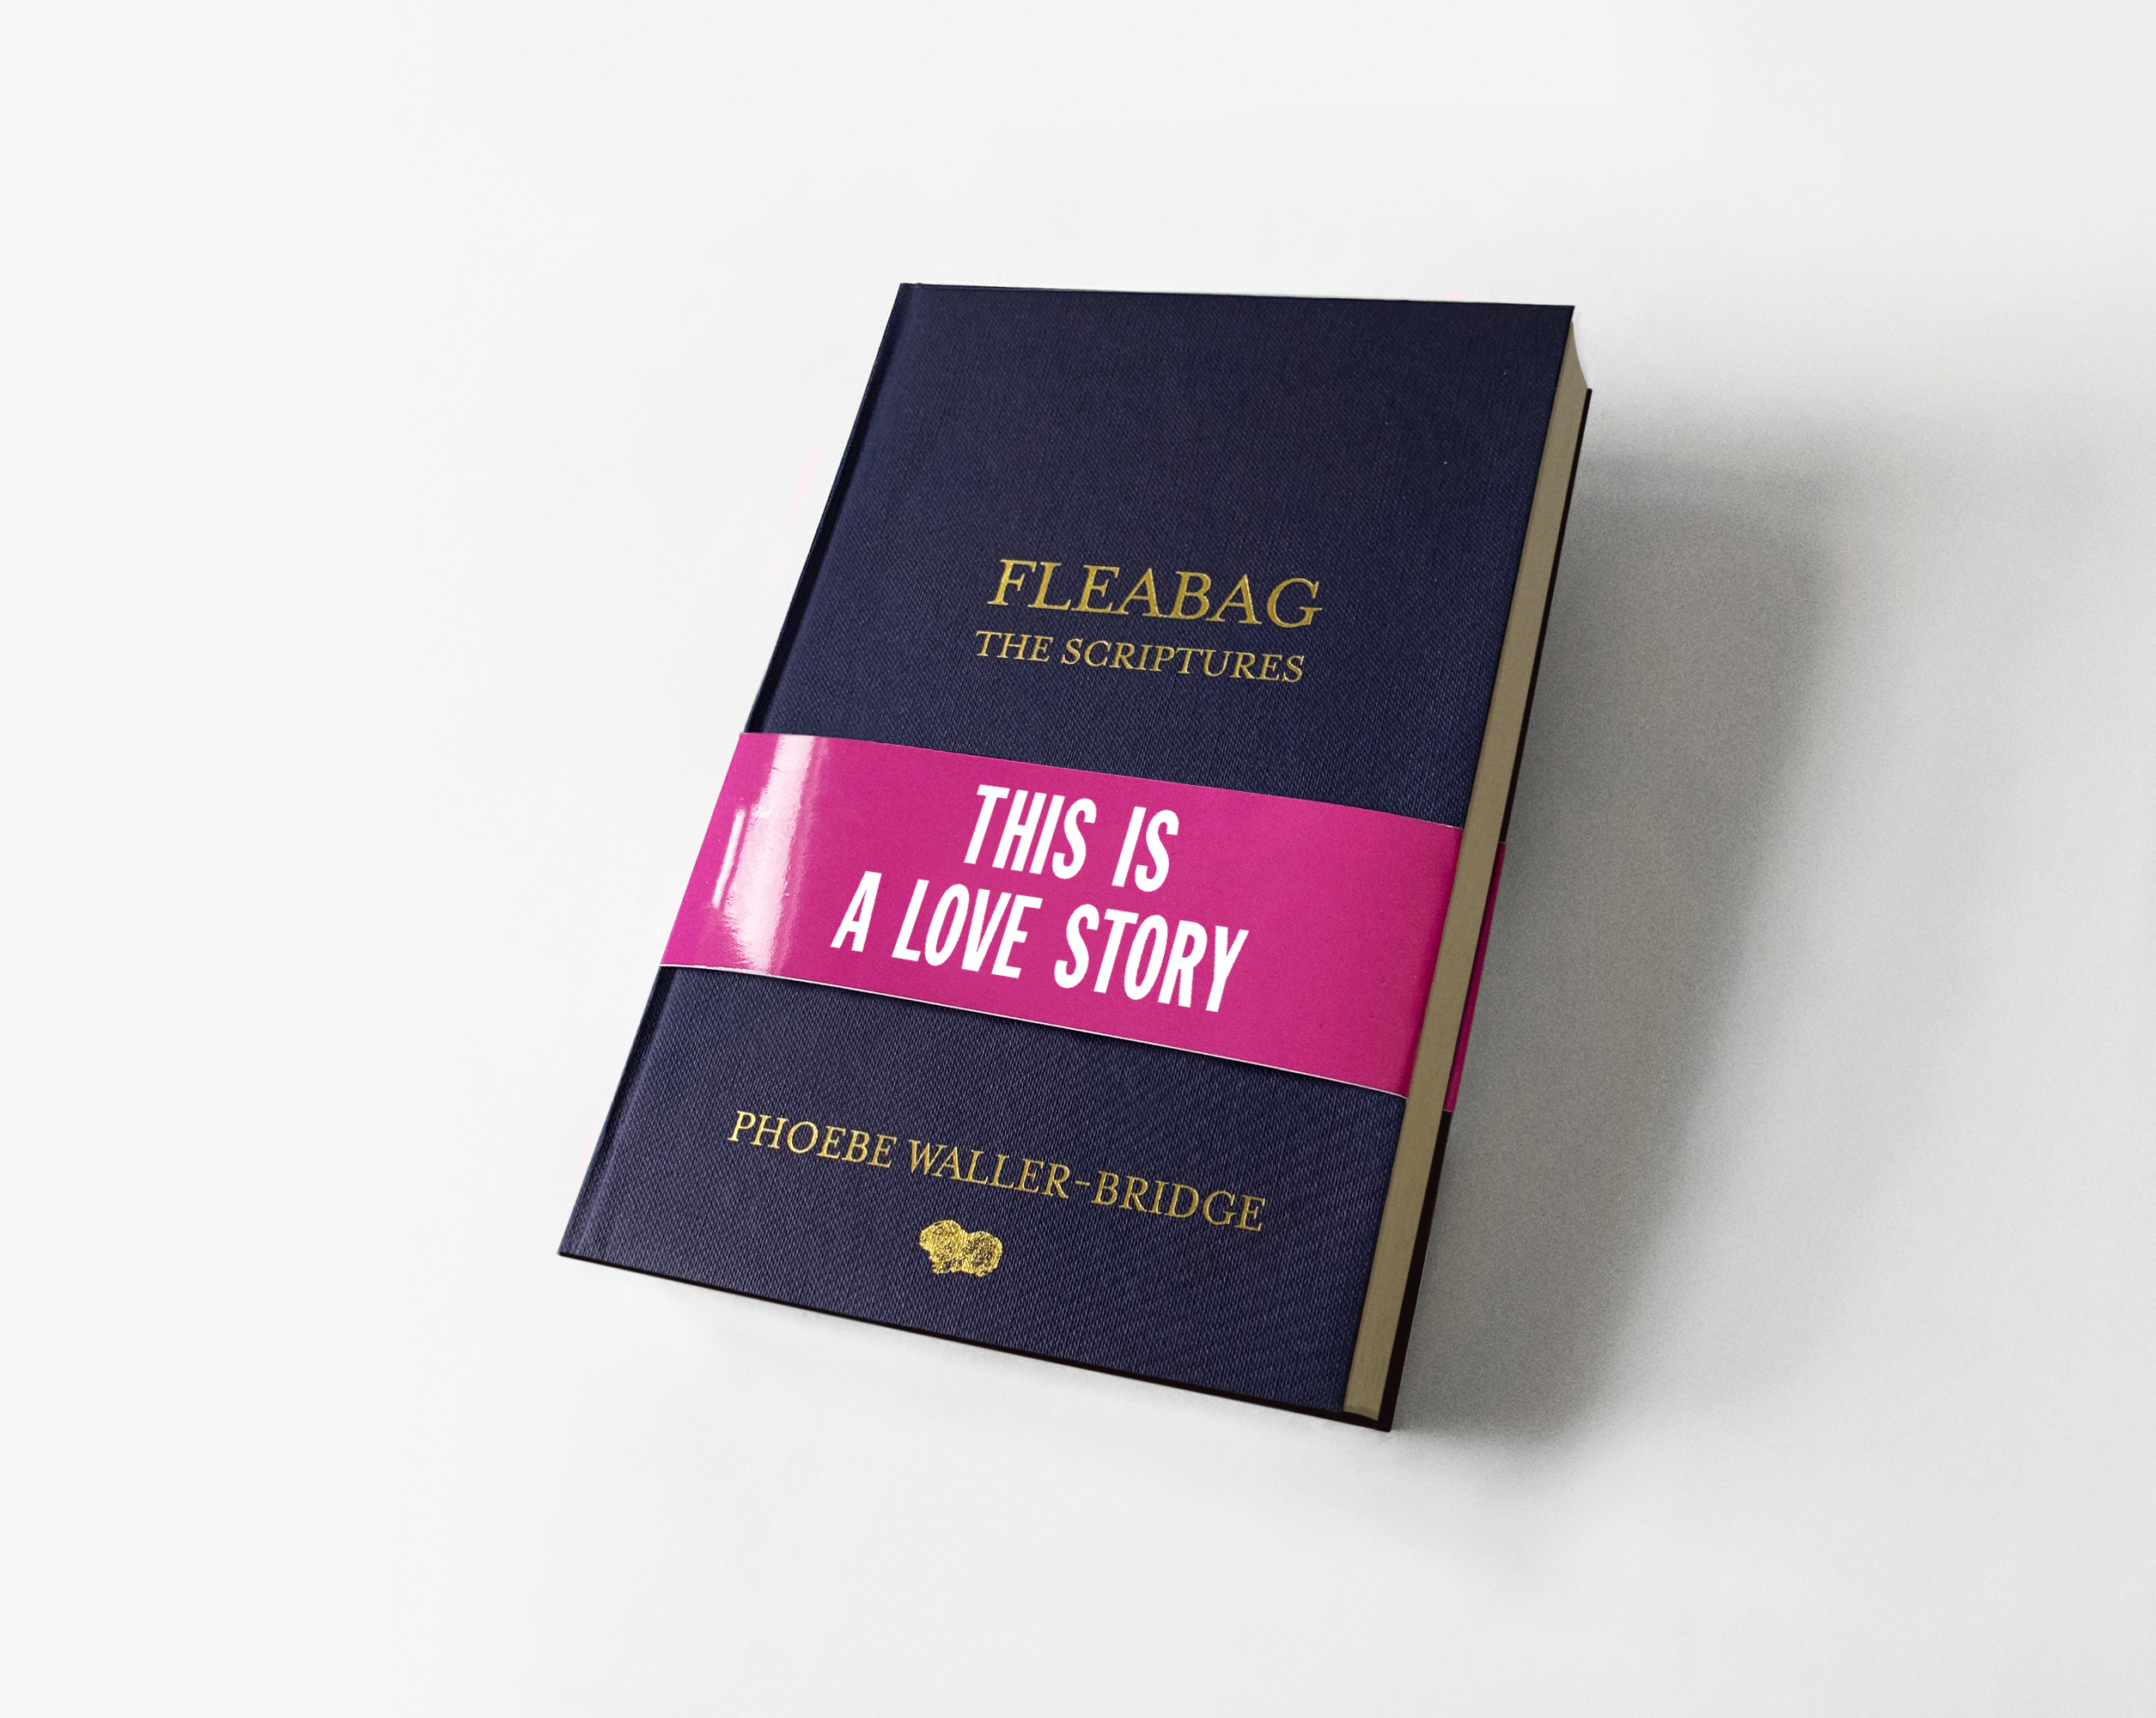 Fleabag: The Scriptures by Phoebe Waller-Bridge 